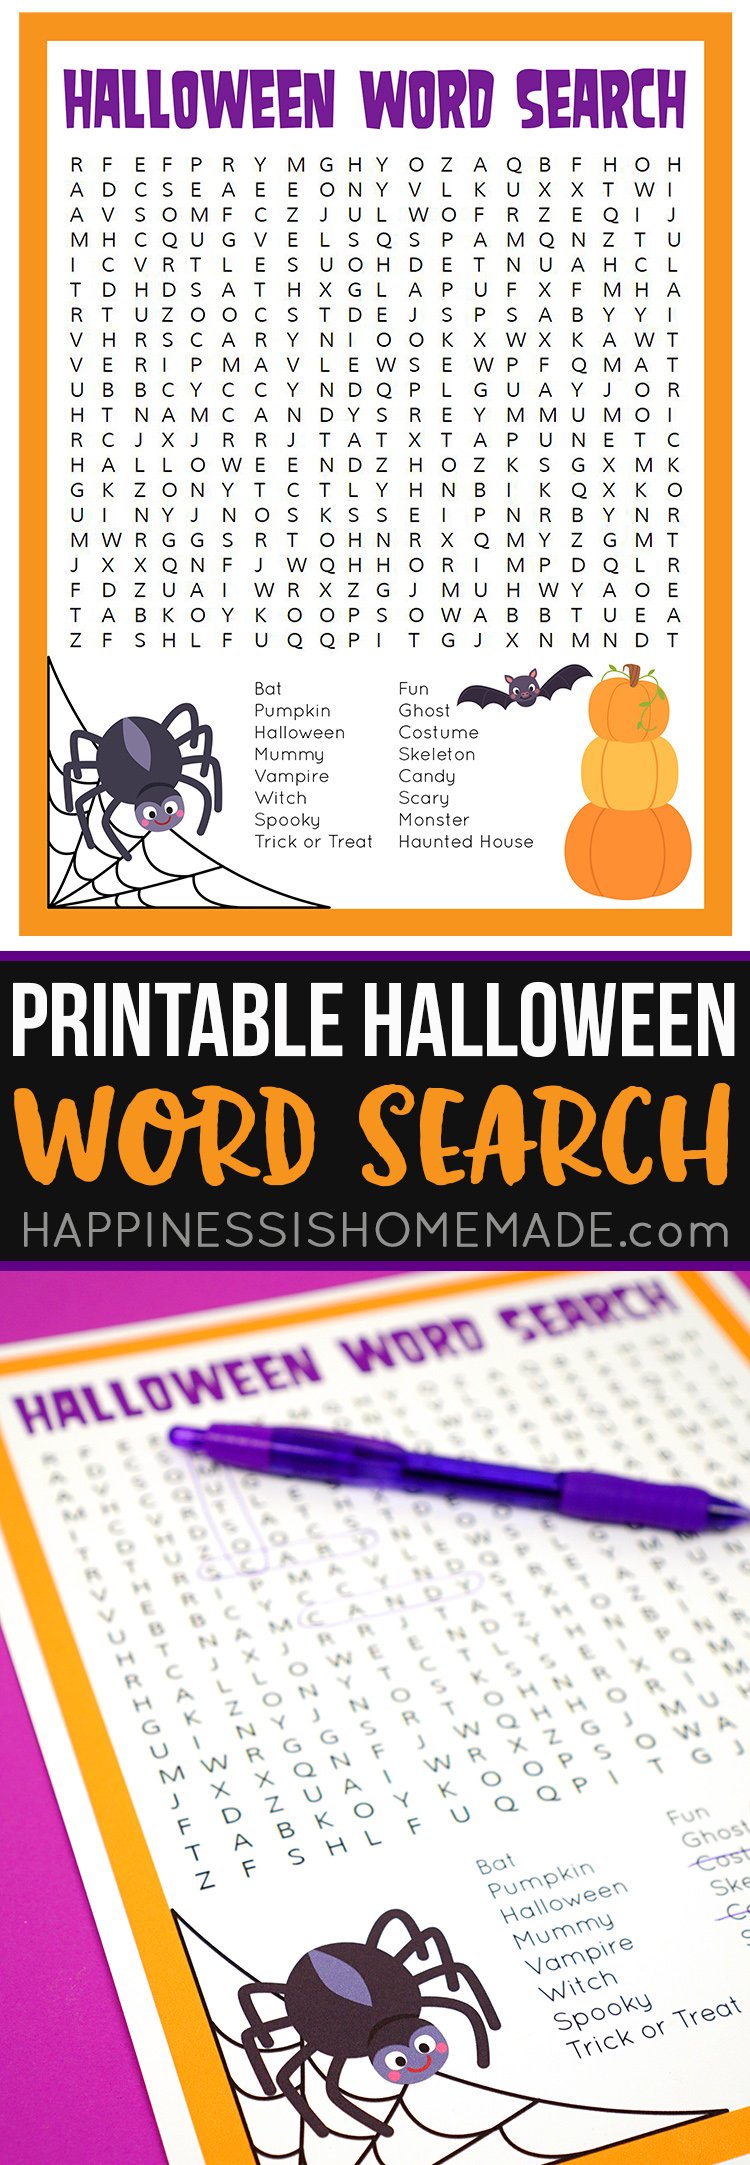 printable halloween word search by happinessishomemade.com